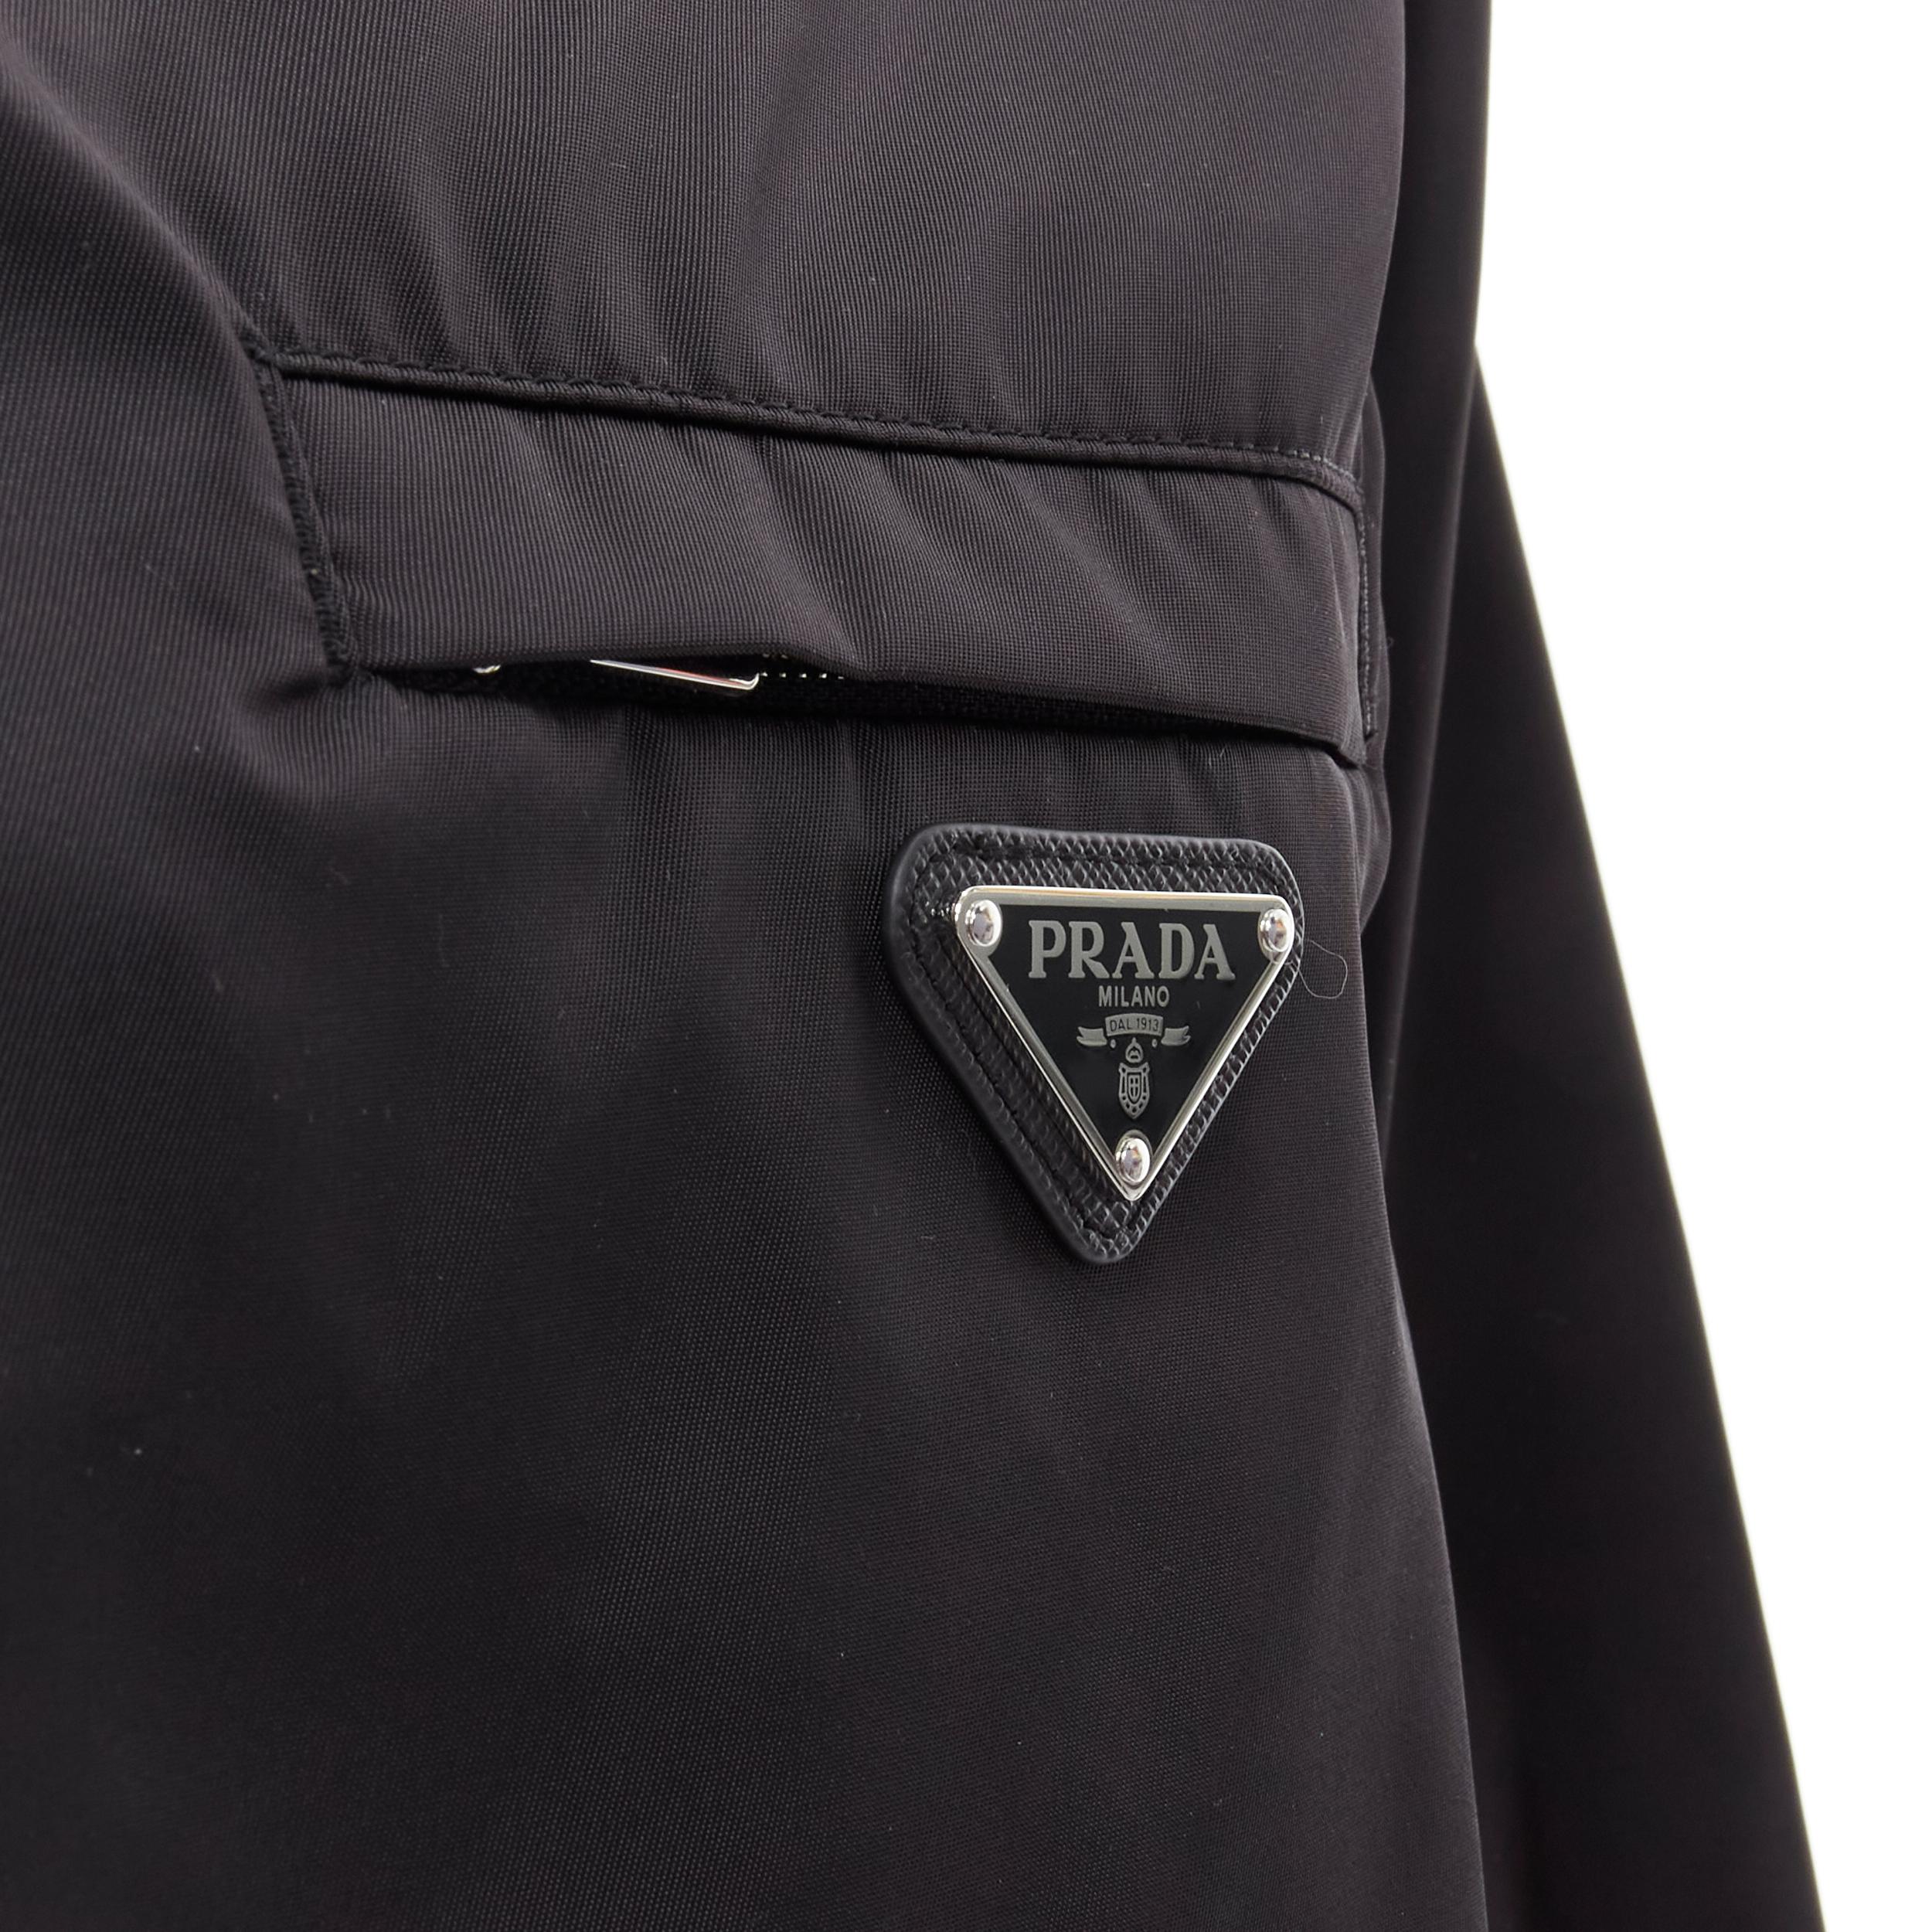 PRADA 2020 Re-Nylon black boat neck triangle logo seal popover sweater shell IT50 L 
Reference: MELK/A00136 
Brand: Prada 
Designer: Raf Simons 
Collection: 2020 
Material: Nylon 
Color: Black 
Pattern: Solid 
Extra Detail: Black Re-Nylon. Logo seal